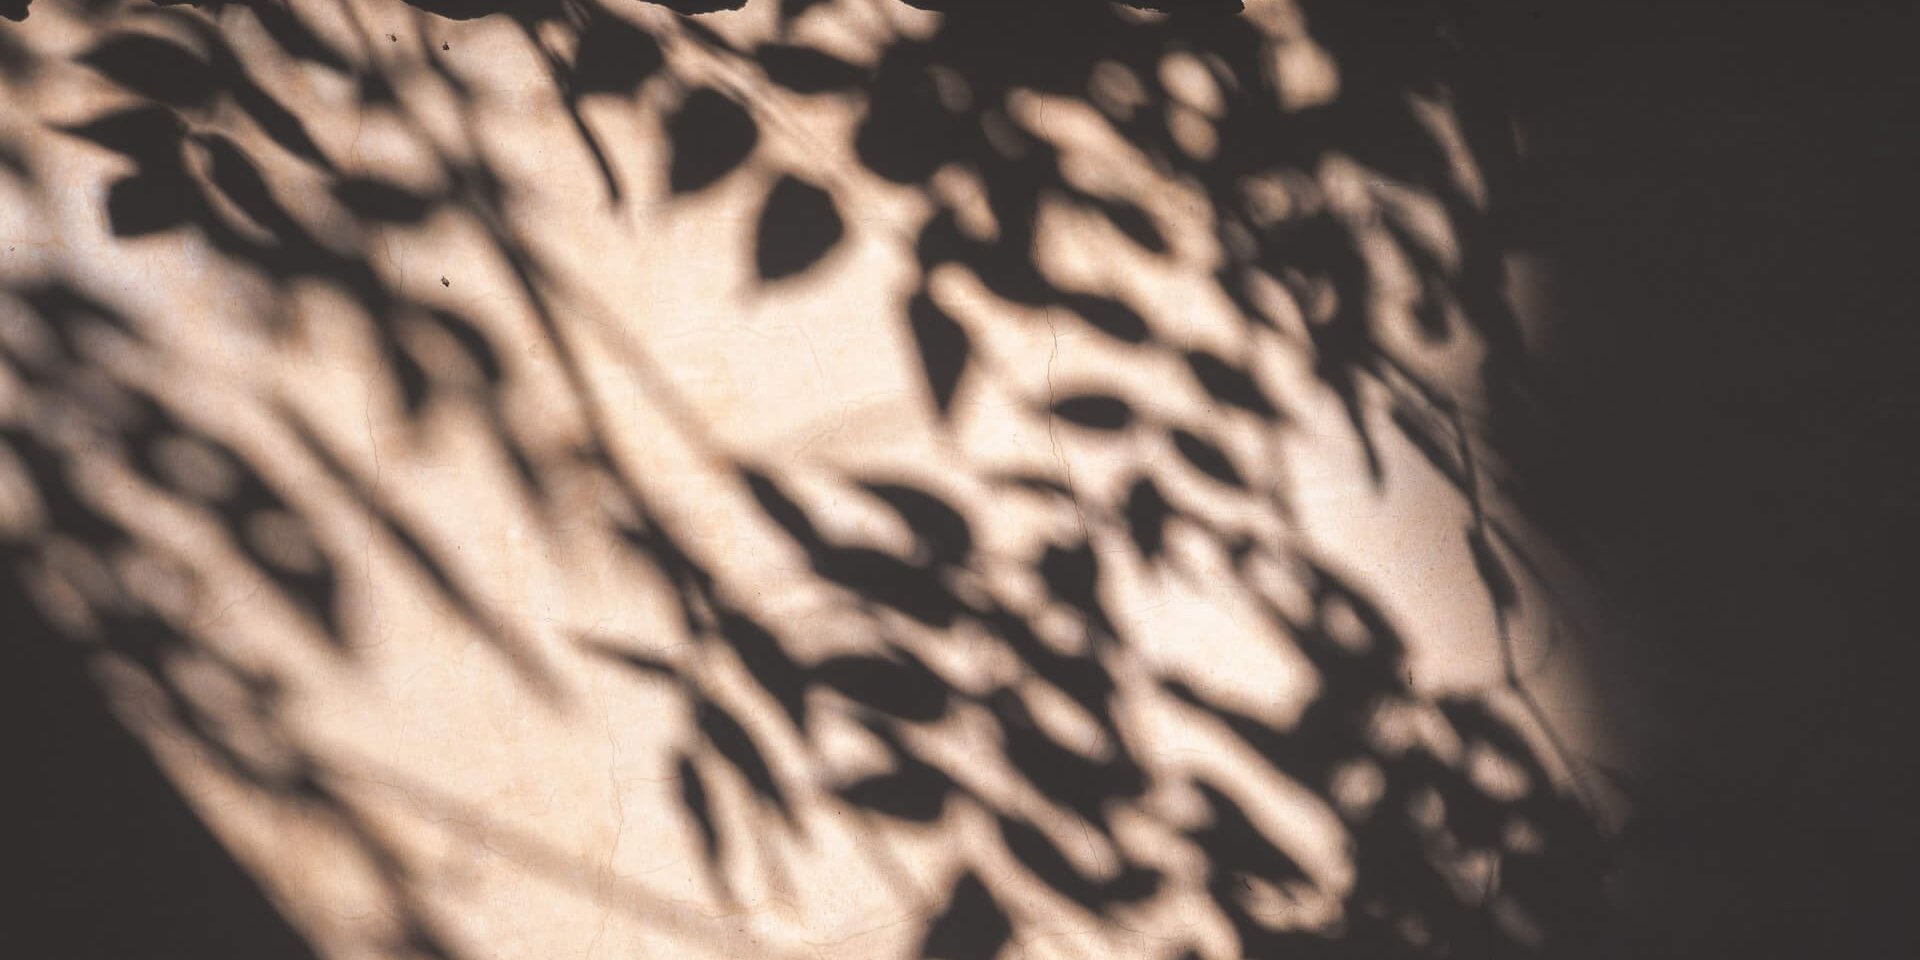 Shadow of plants